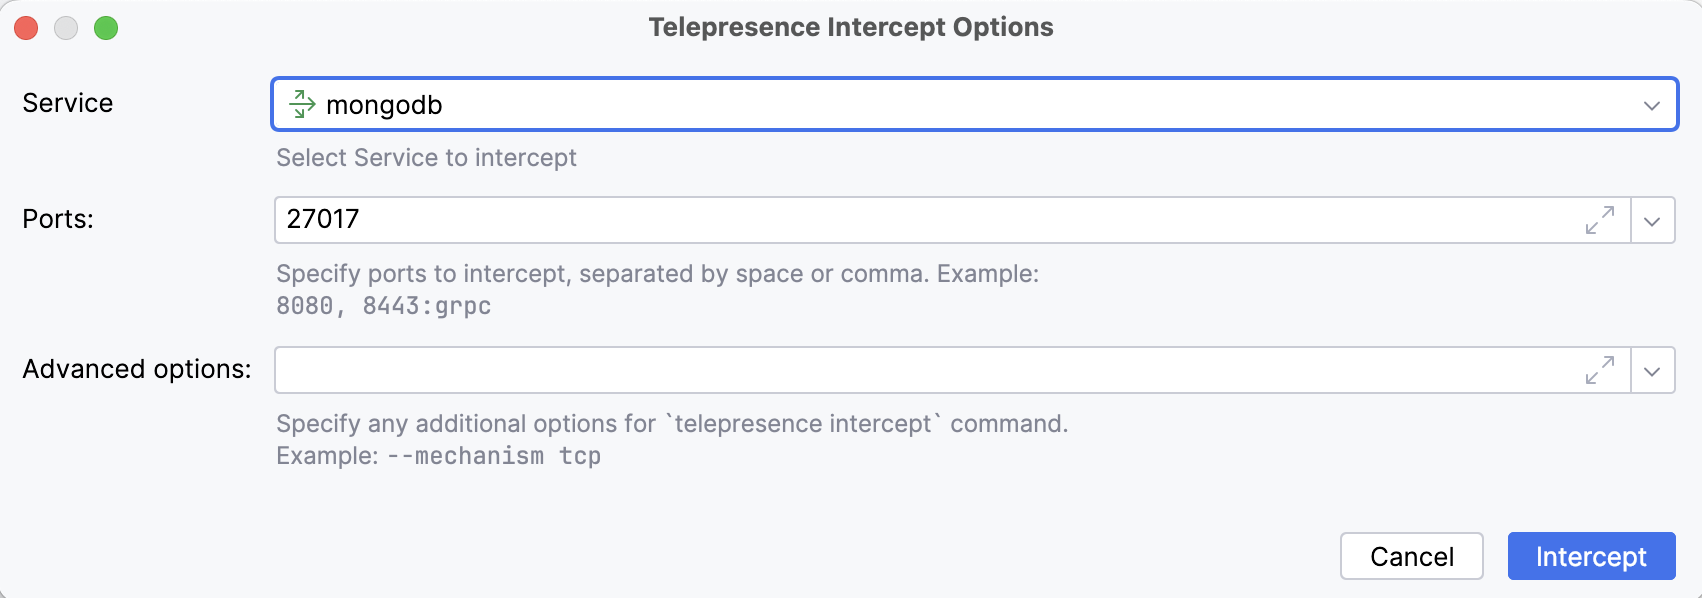 Telepresence Intercept